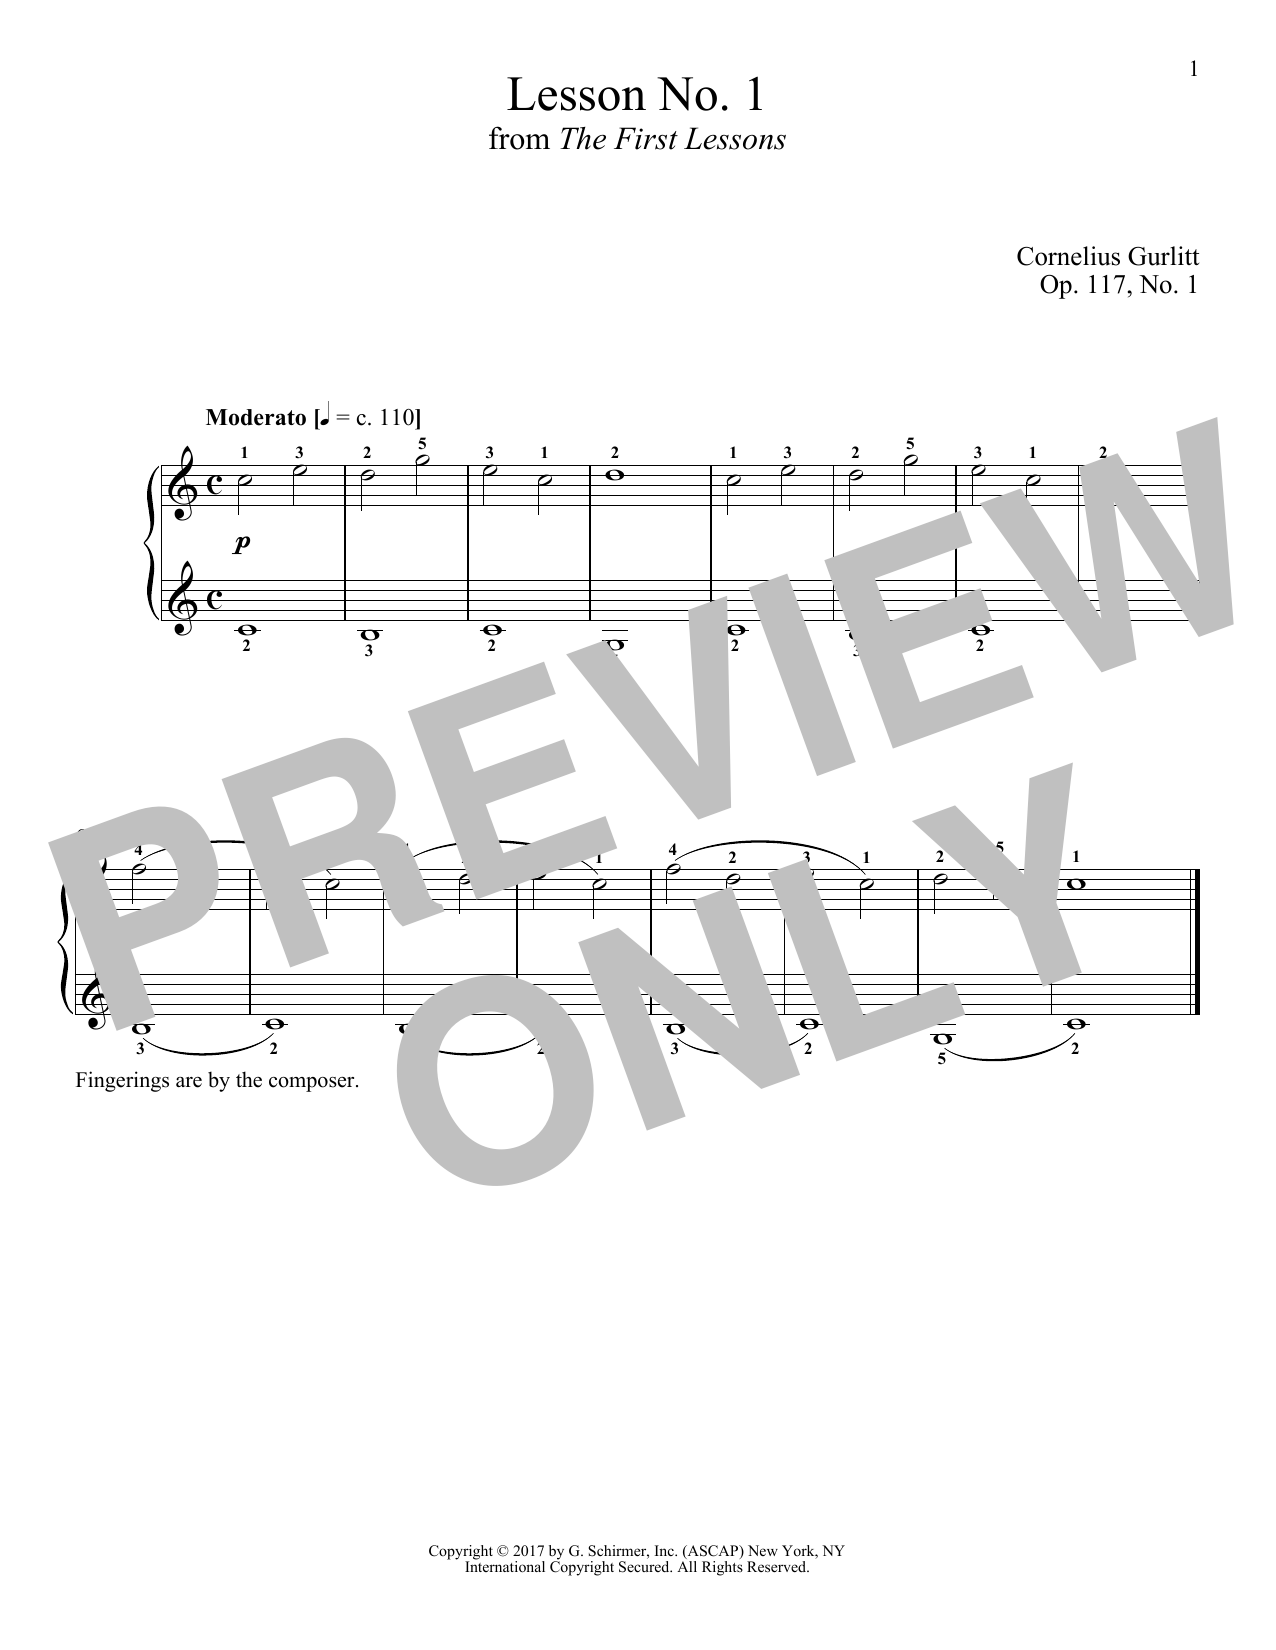 Cornelius Gurlitt Moderato, Op. 117, No. 1 Sheet Music Notes & Chords for Piano - Download or Print PDF